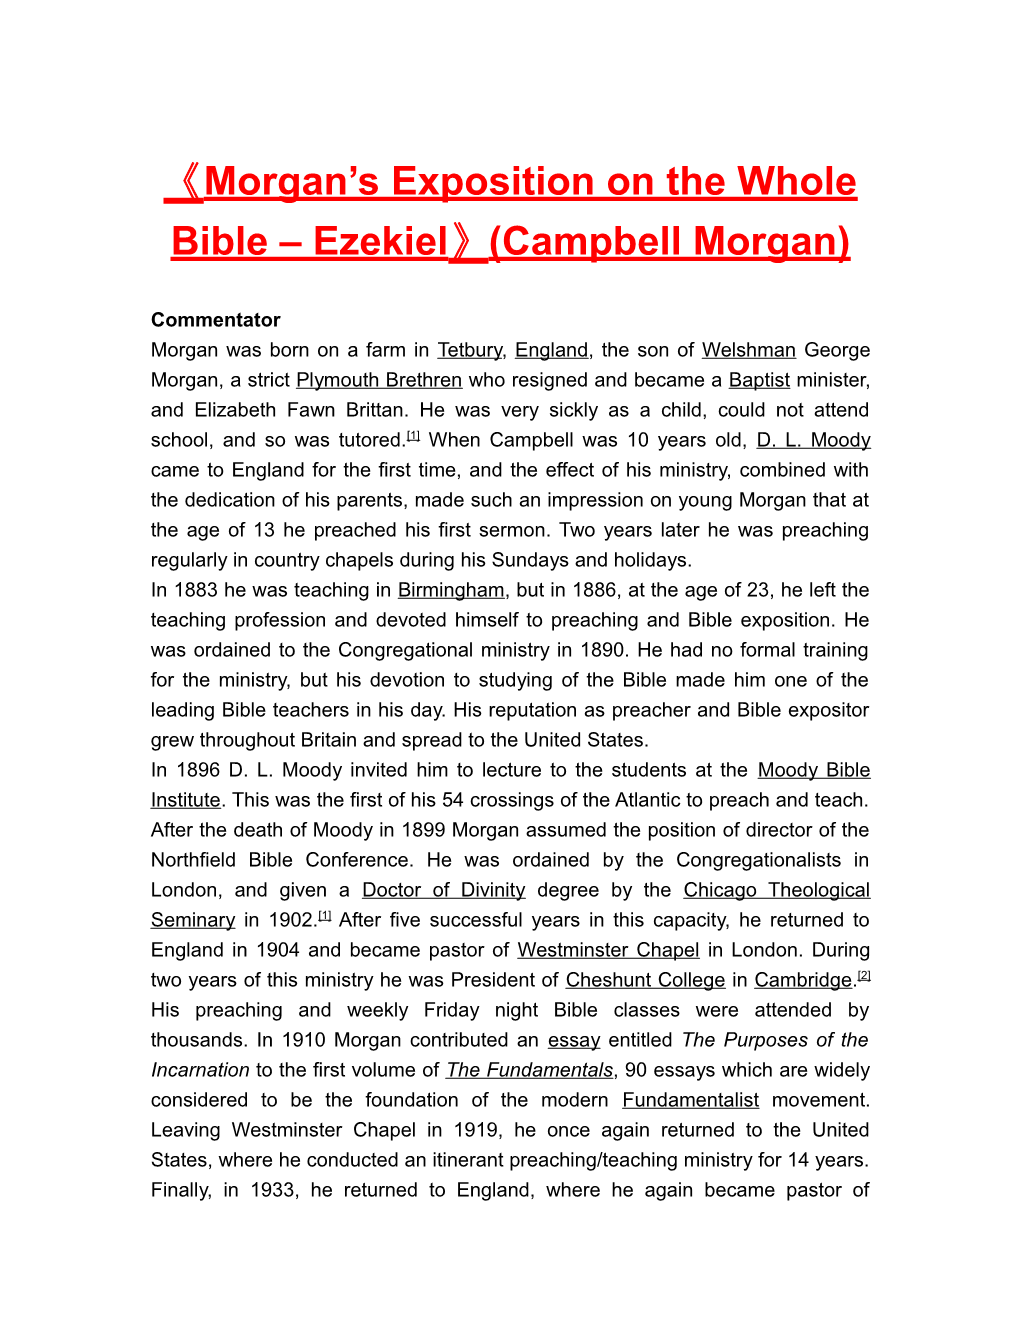 Morgan Sexposition on the Wholebible Ezekiel (Campbell Morgan)